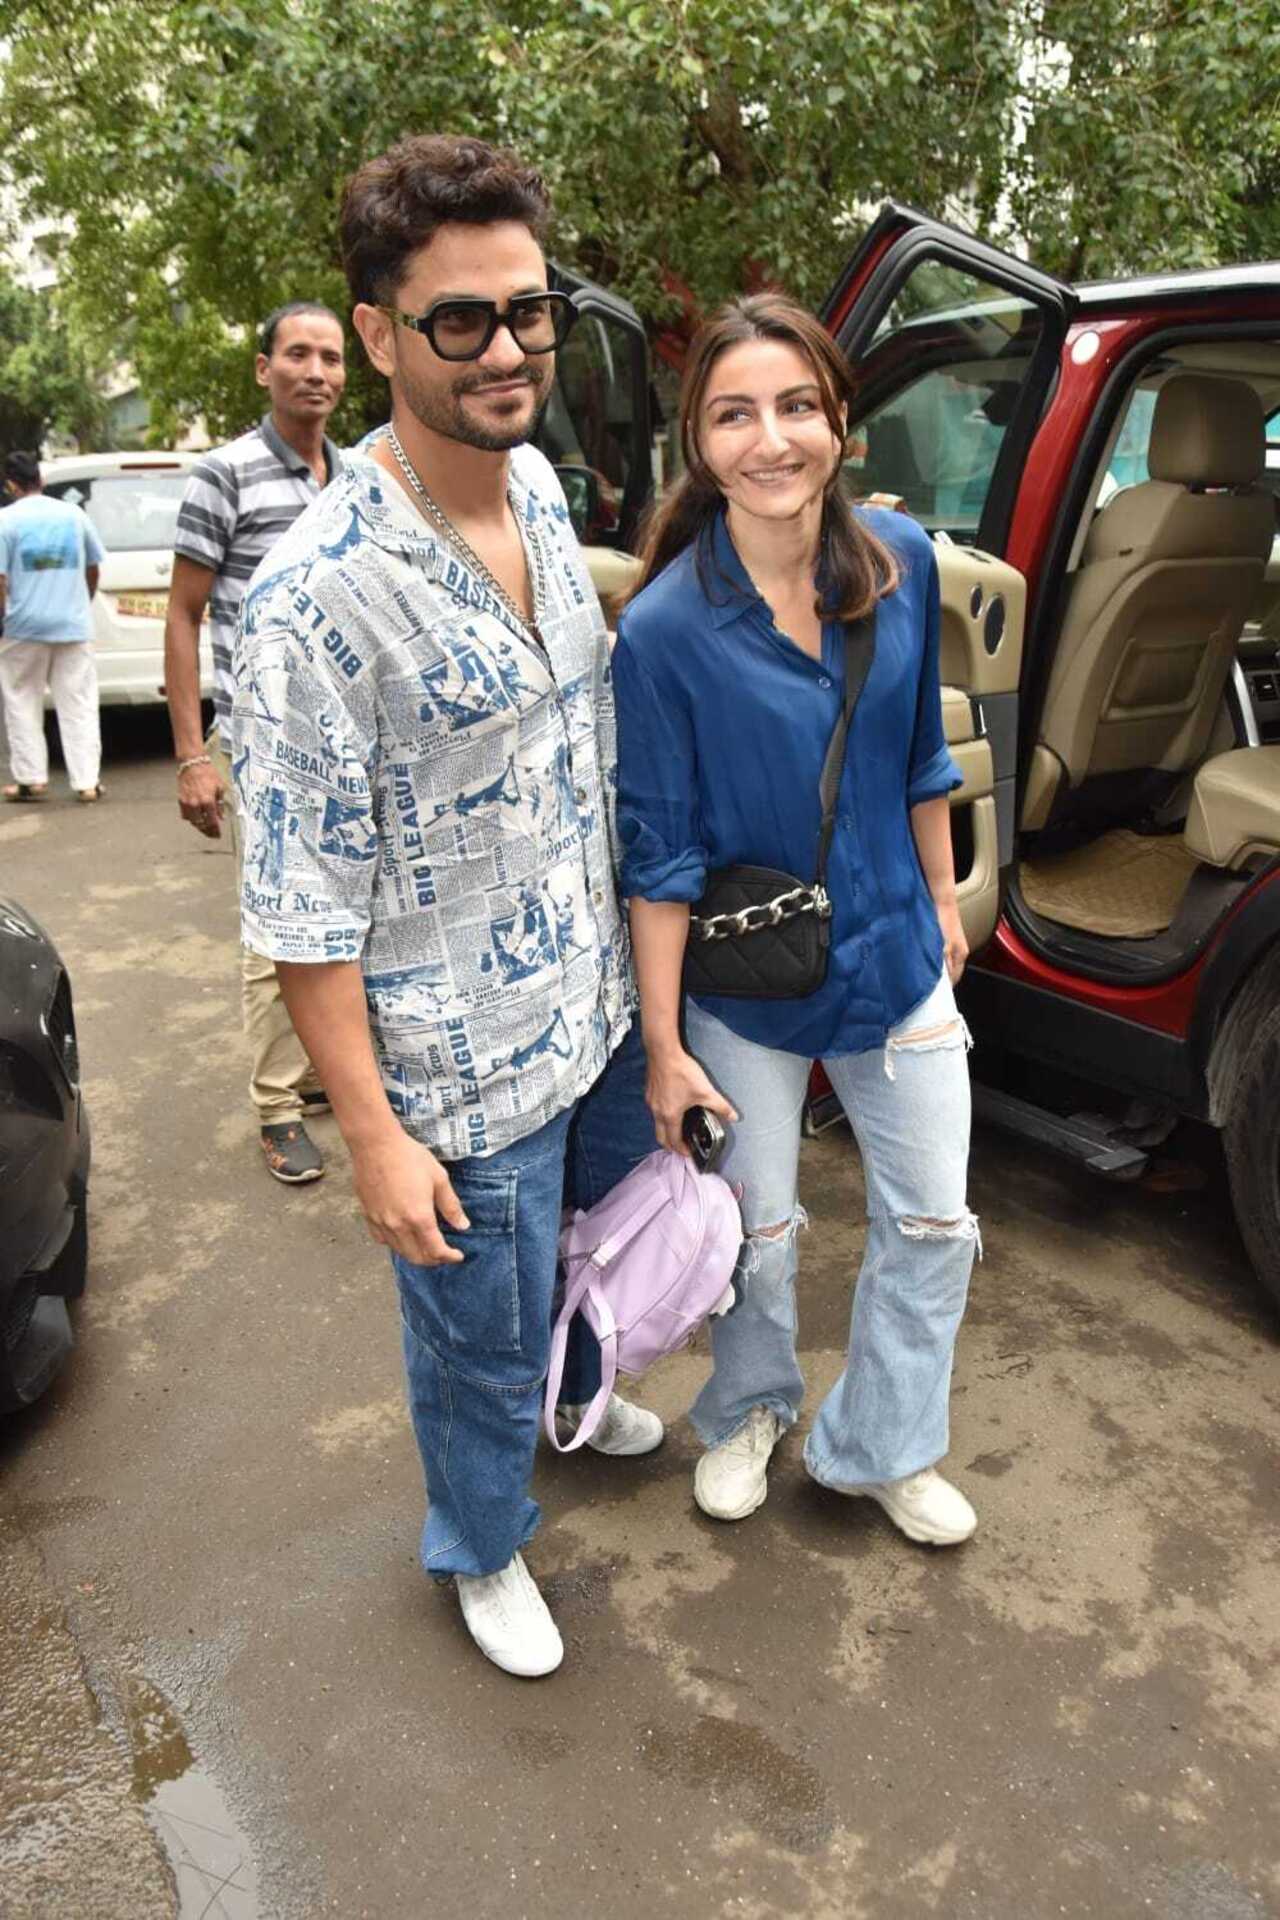 Soha Ali Khan and Kunal Kemmu were spotted wearing cool outfits